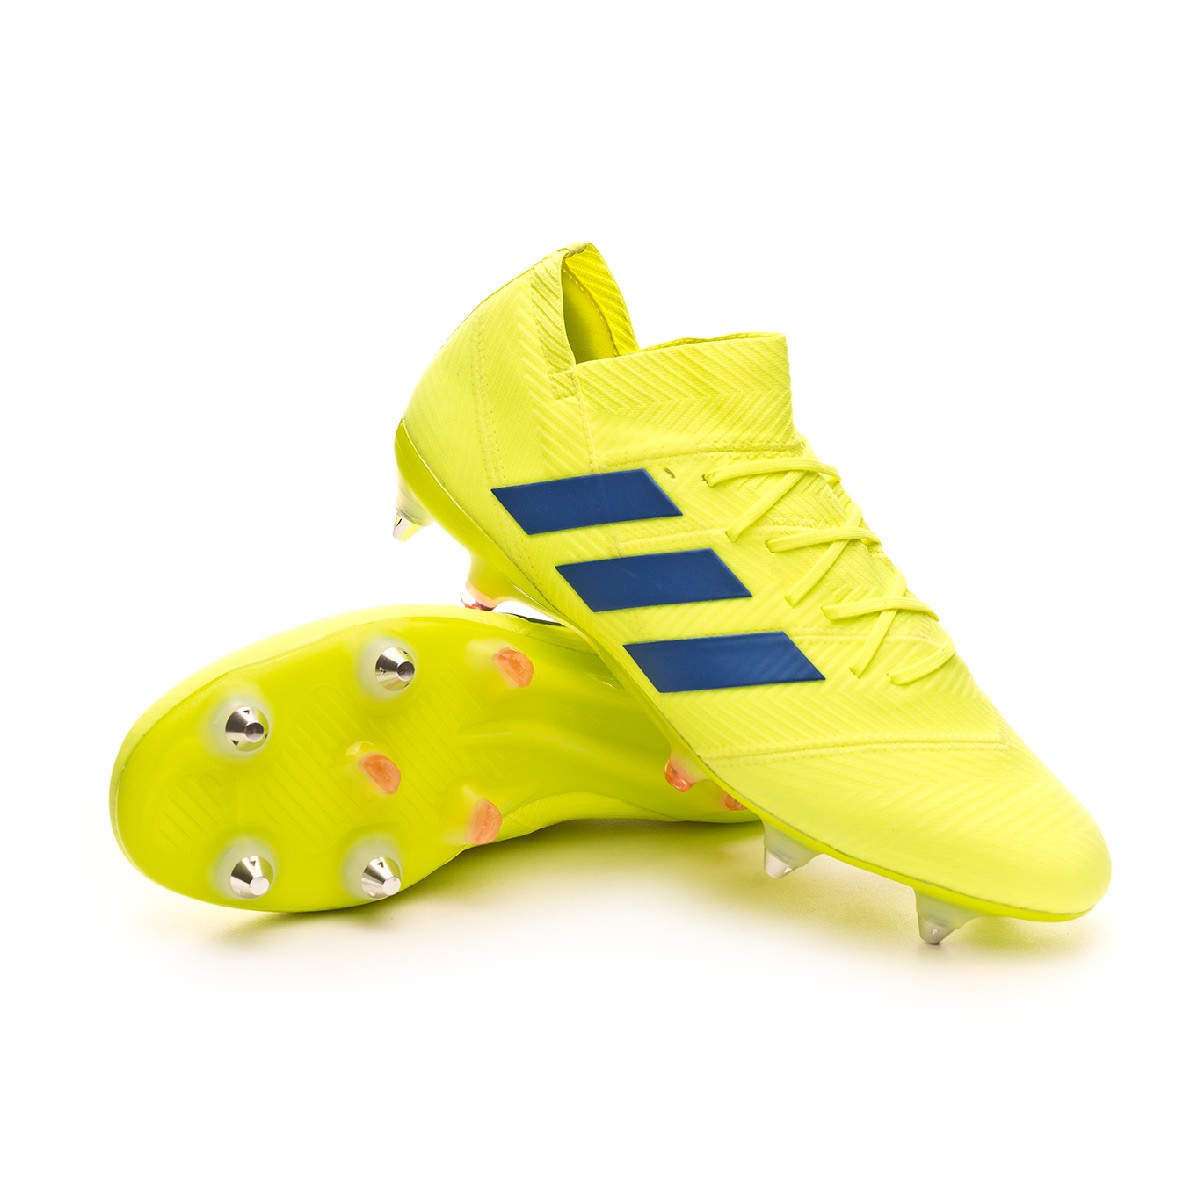 adidas yellow football boots